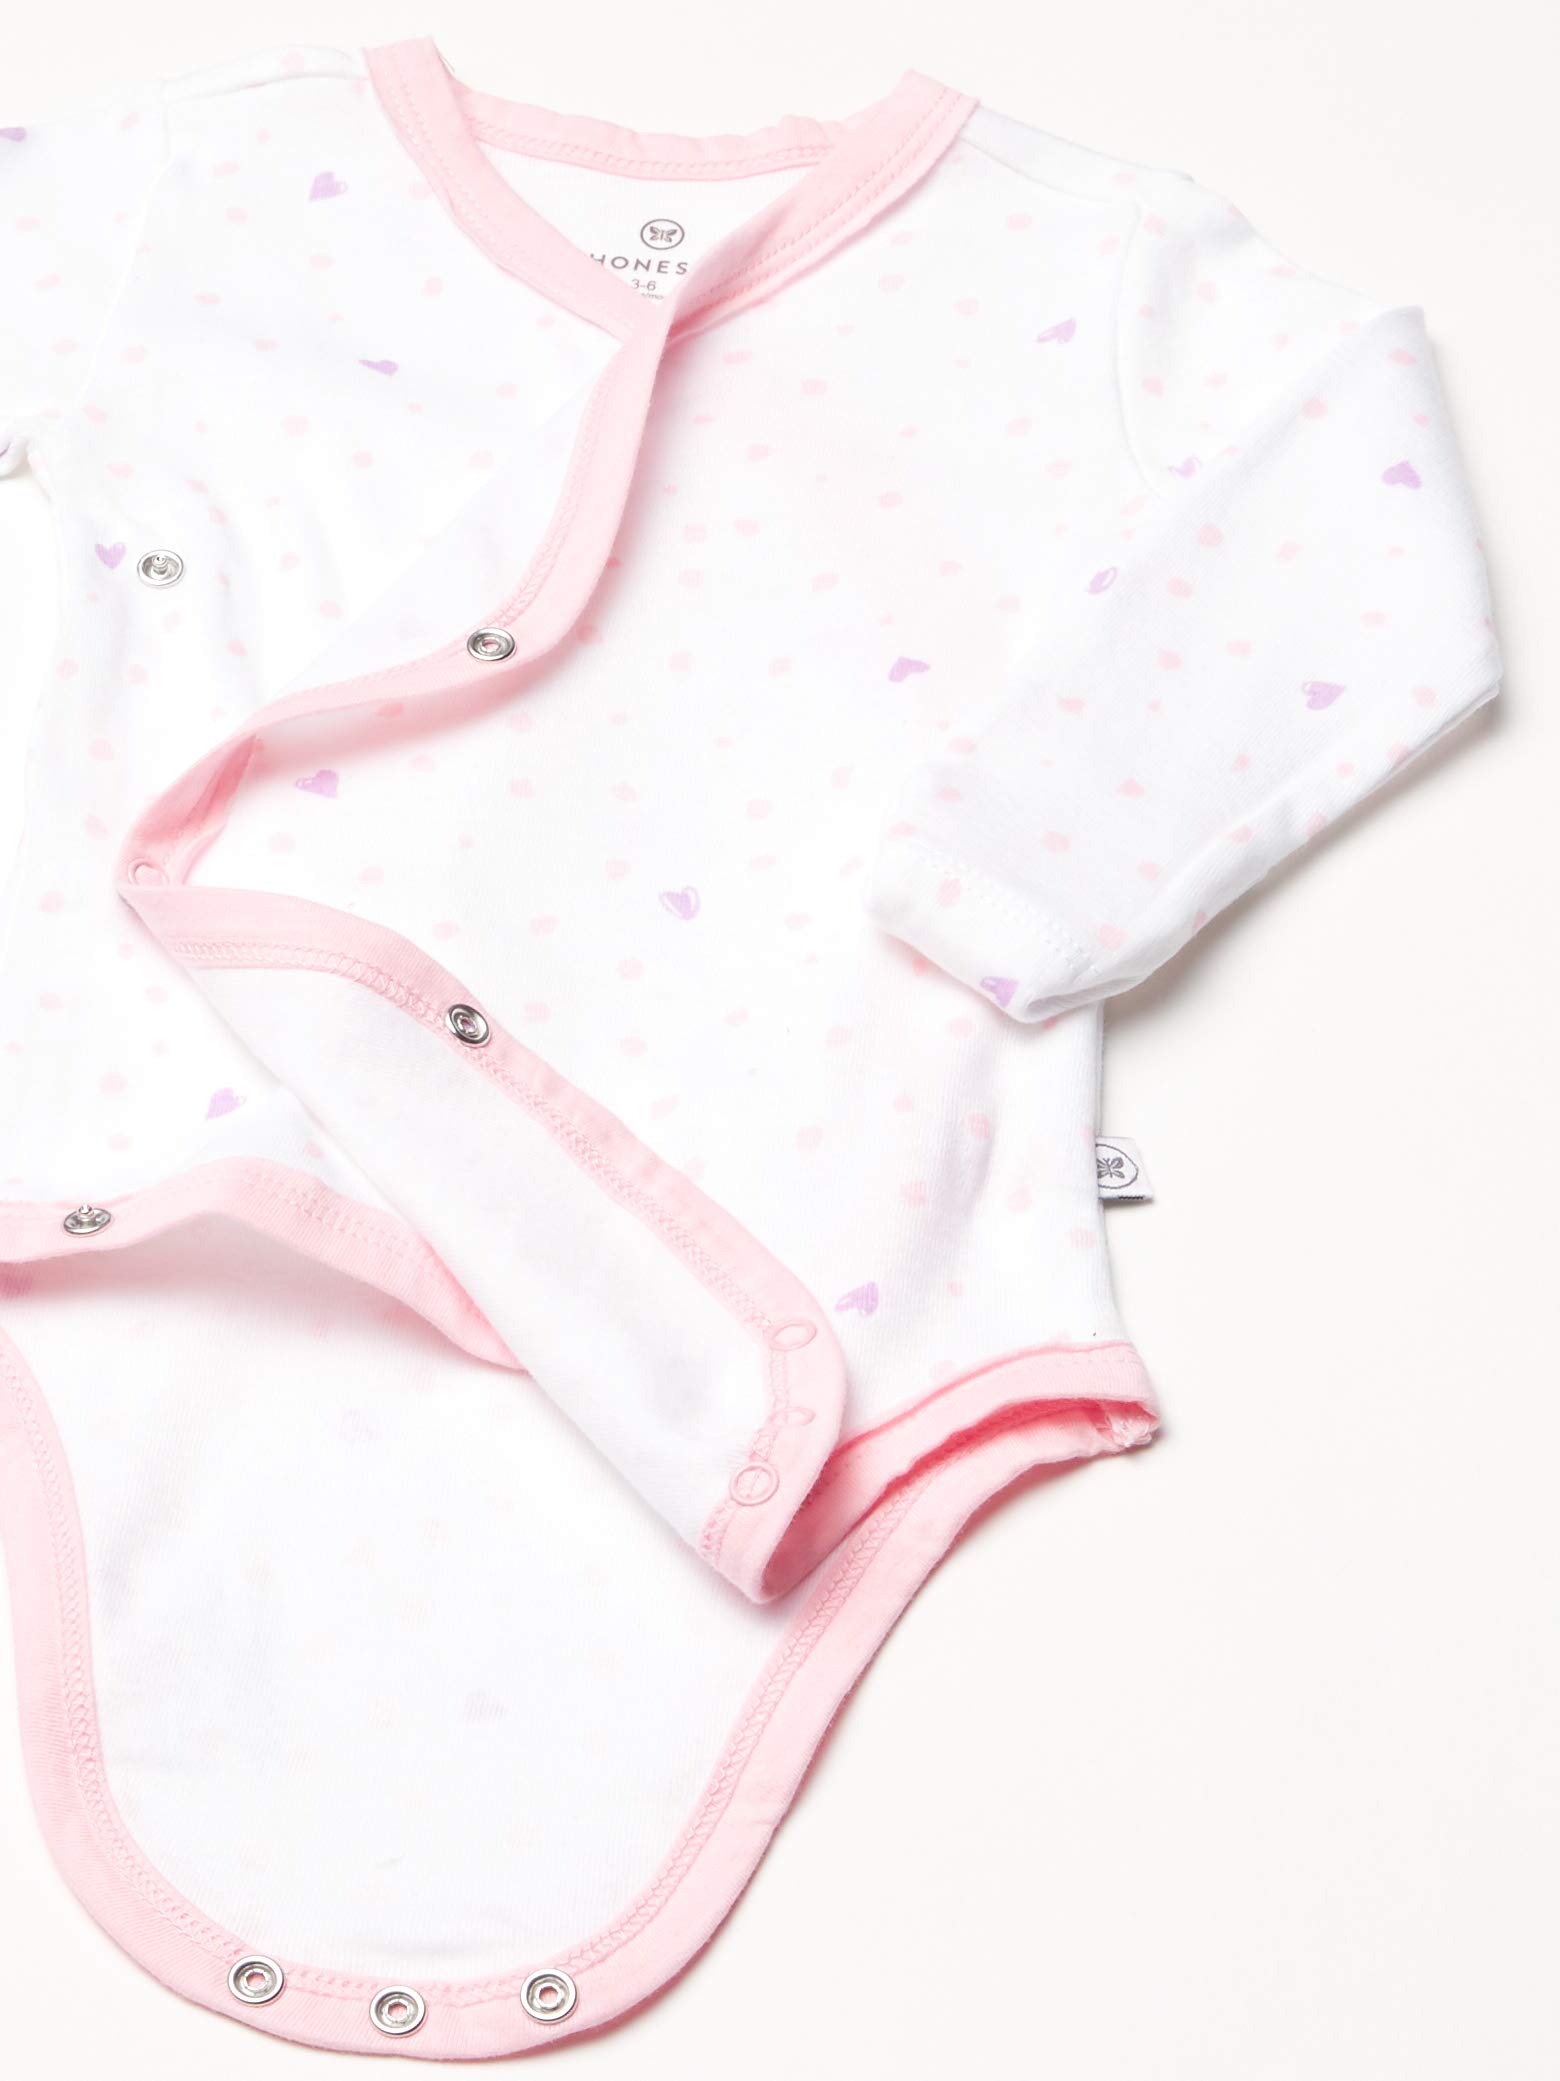 HonestBaby 3-Pack Long Sleeve Side-Snap Kimono Bodysuits Newborn for Infant Baby Girls 100% Organic Cotton